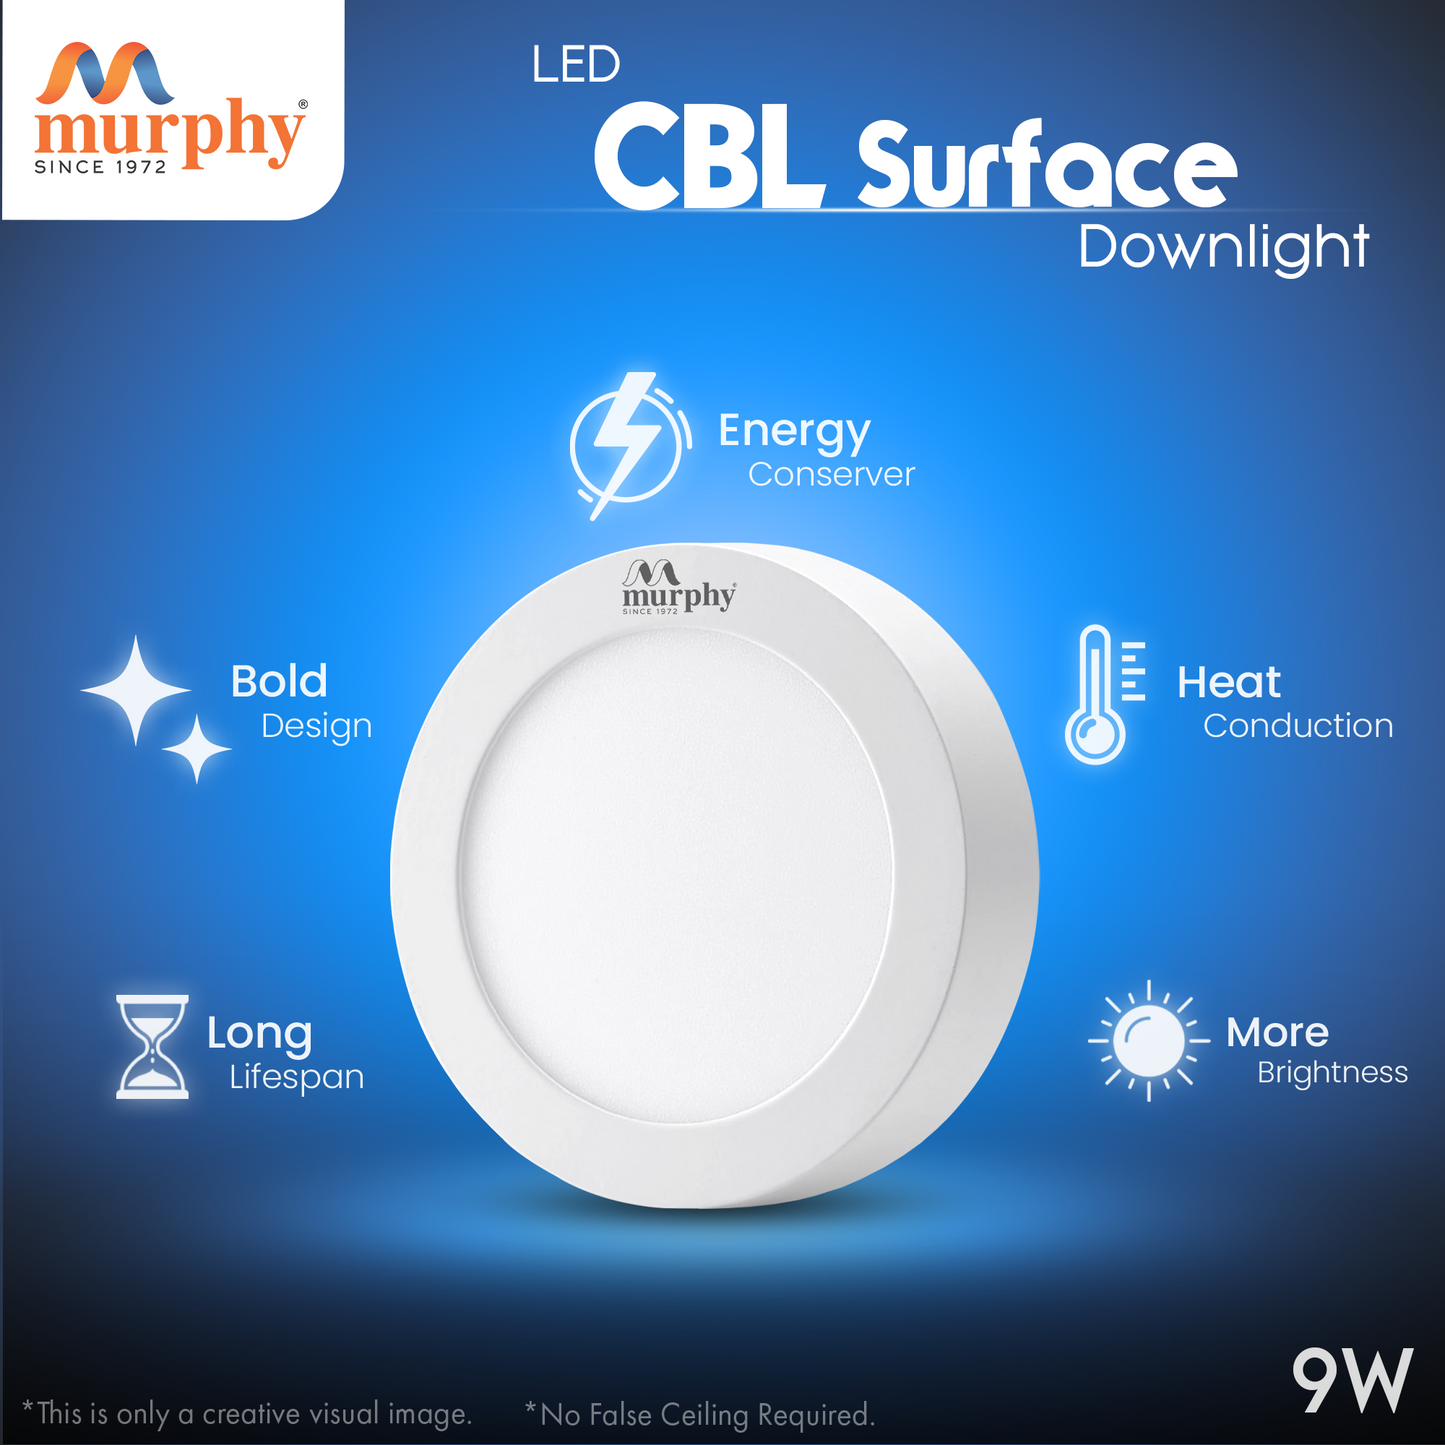 Murphy 9W CBL LED Surface Down Light